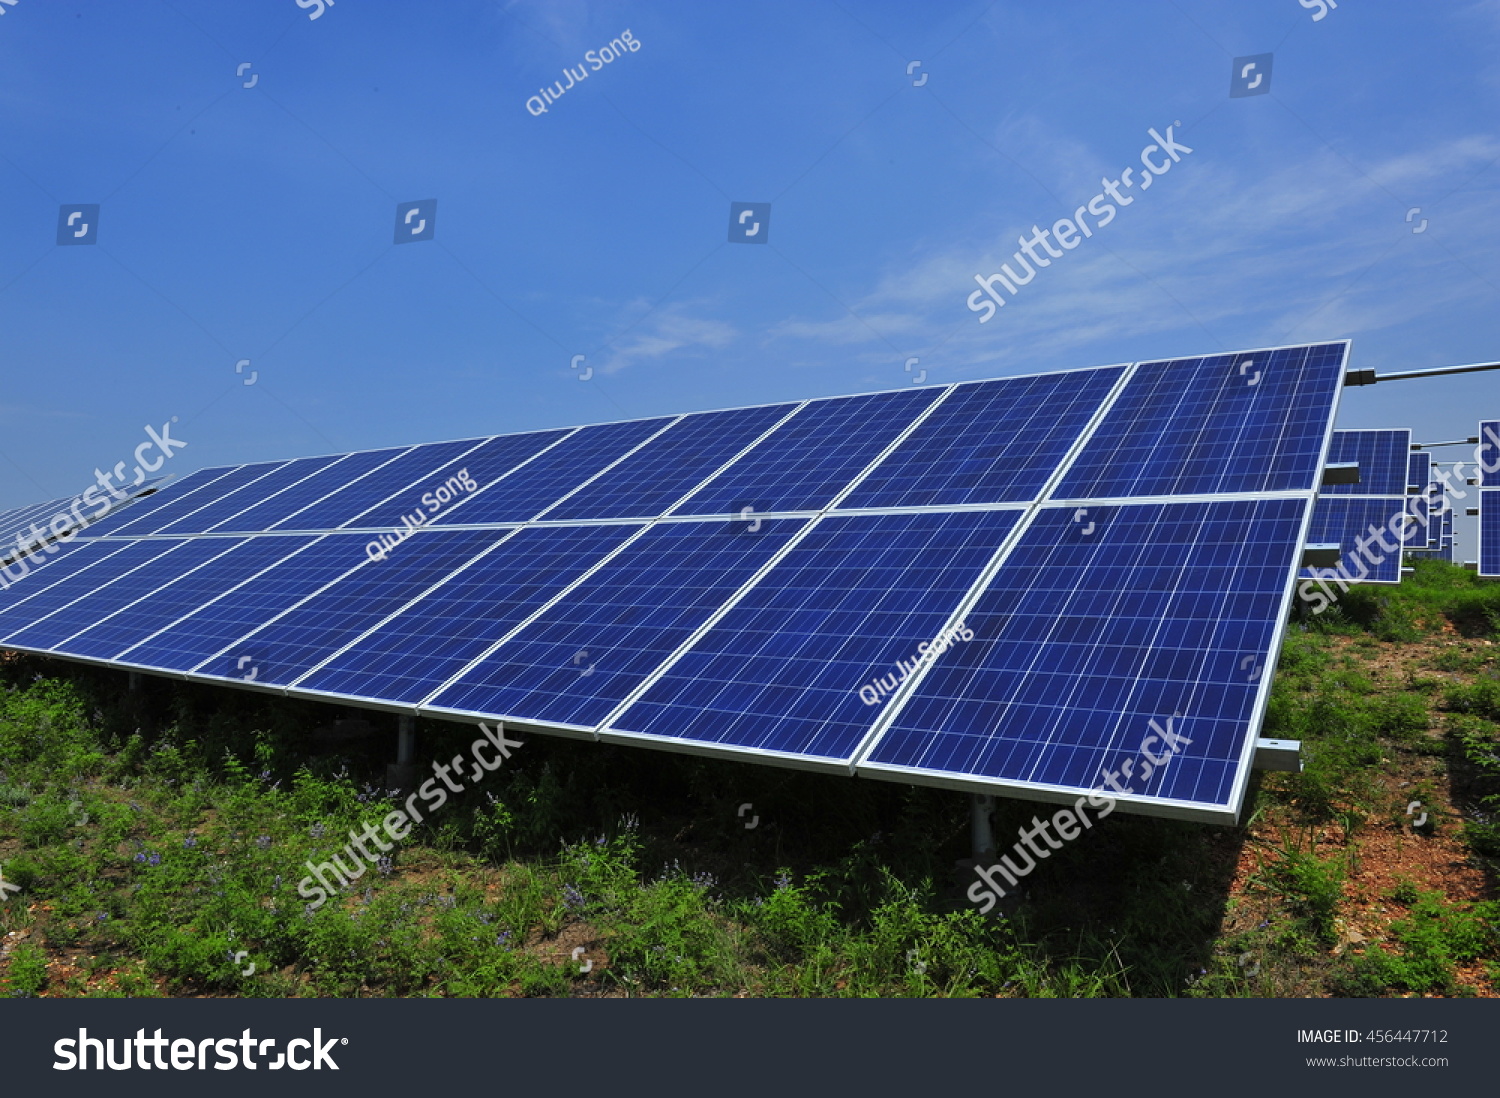 Solar Power Equipment Stock Photo 456447712 : Shutterstock